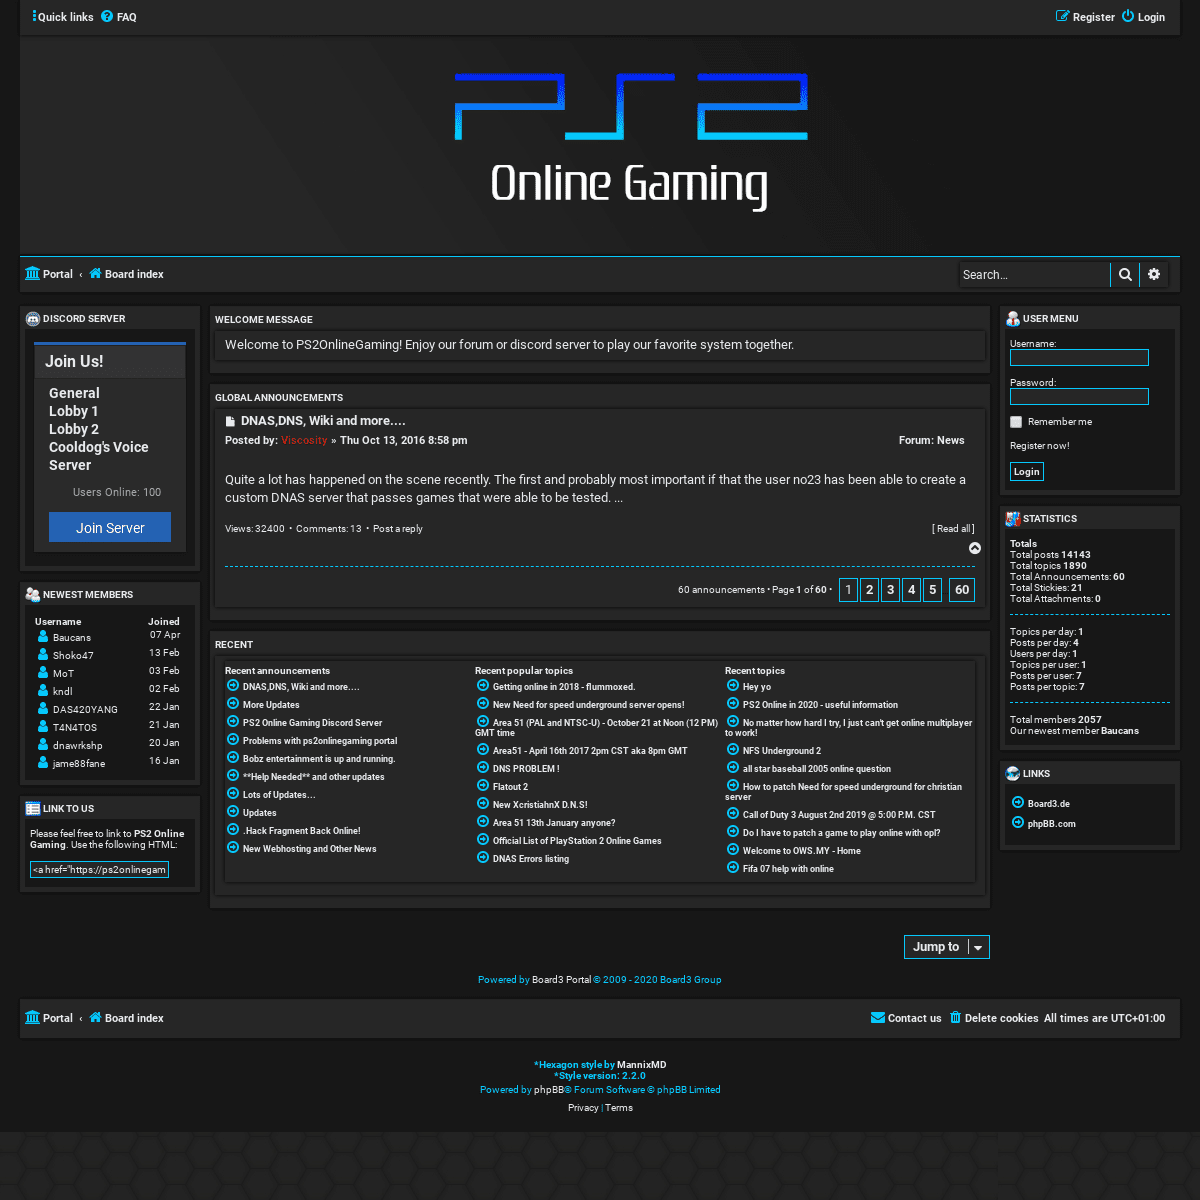 PS2 Online Gaming - Portal